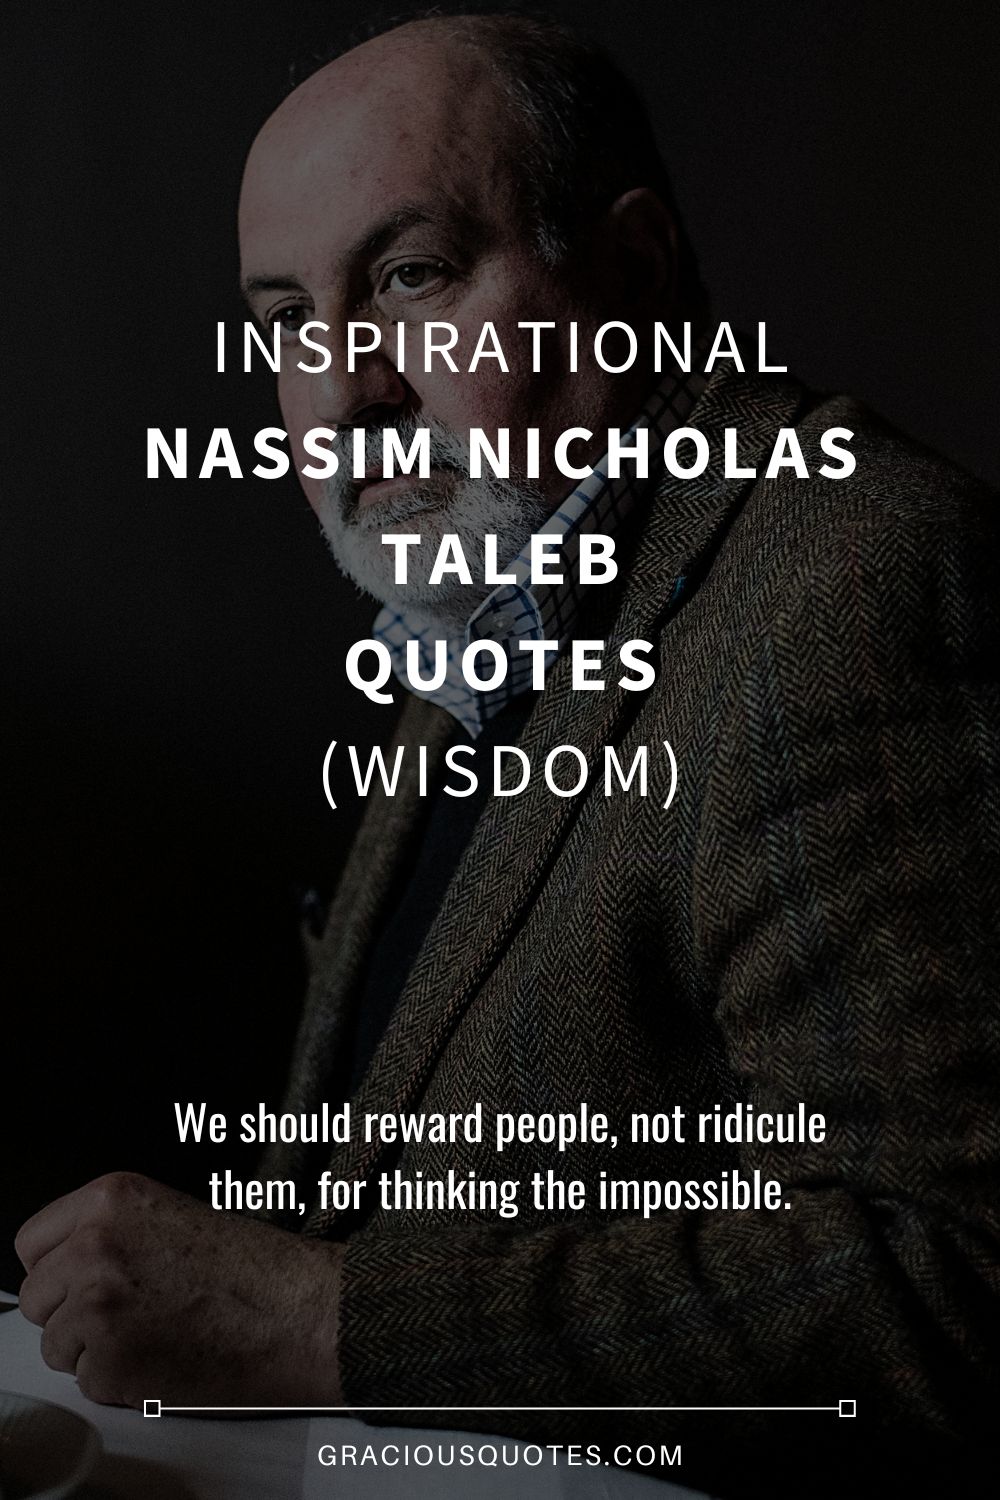 Inspirational Nassim Nicholas Taleb Quotes (WISDOM) - Gracious Quotes